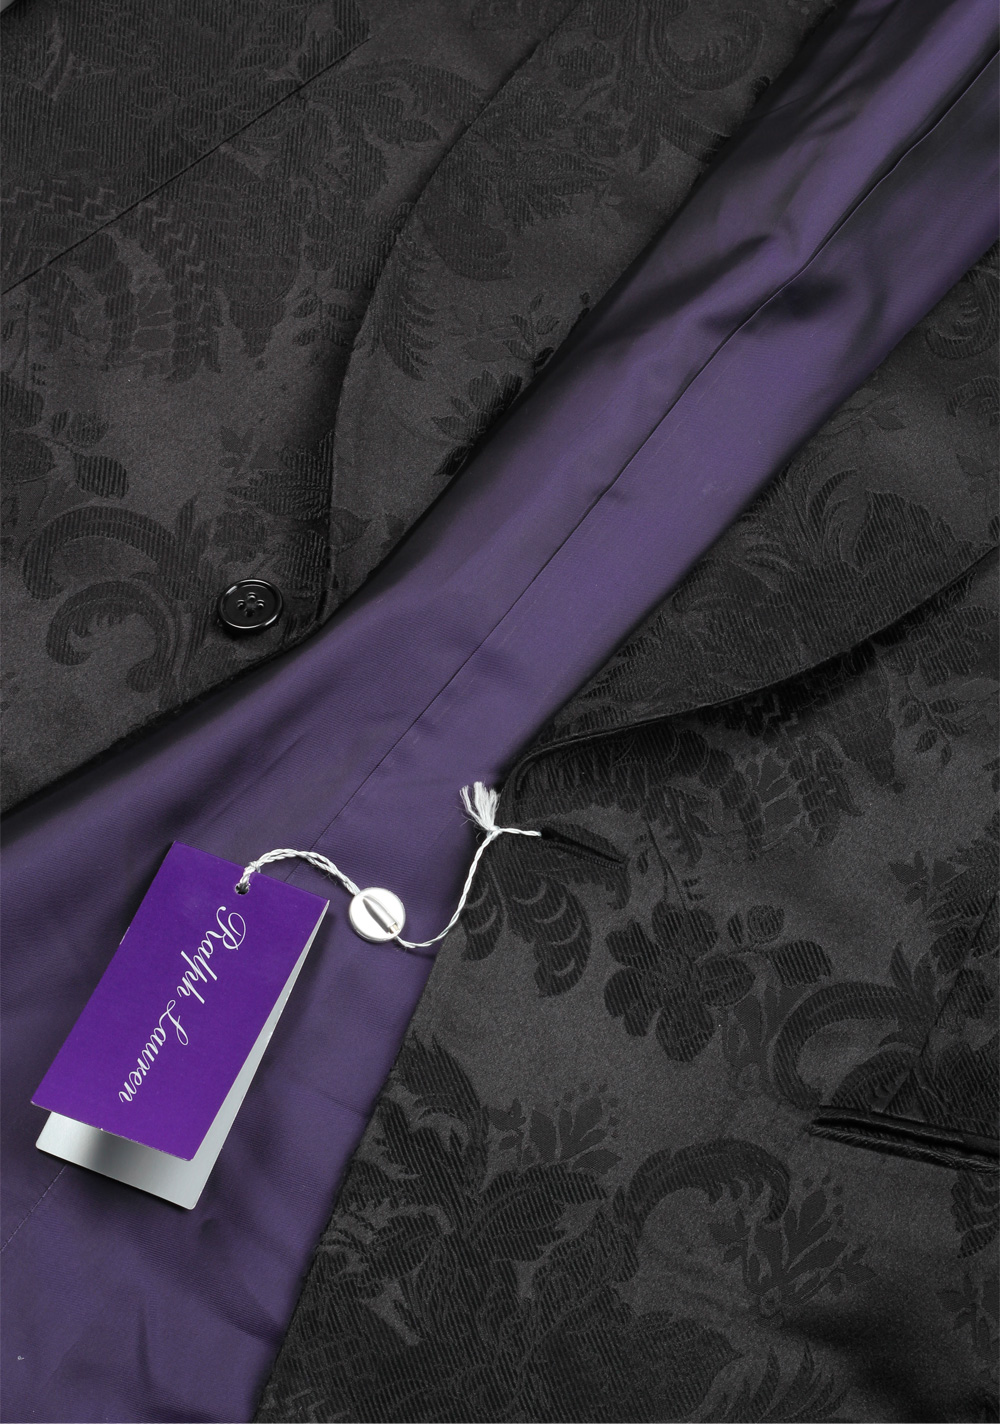 Ralph Lauren Purple Label Black Floral Shawl Dinner Jacket Size 50 / 40R U.S. In Mulberry Silk | Costume Limité